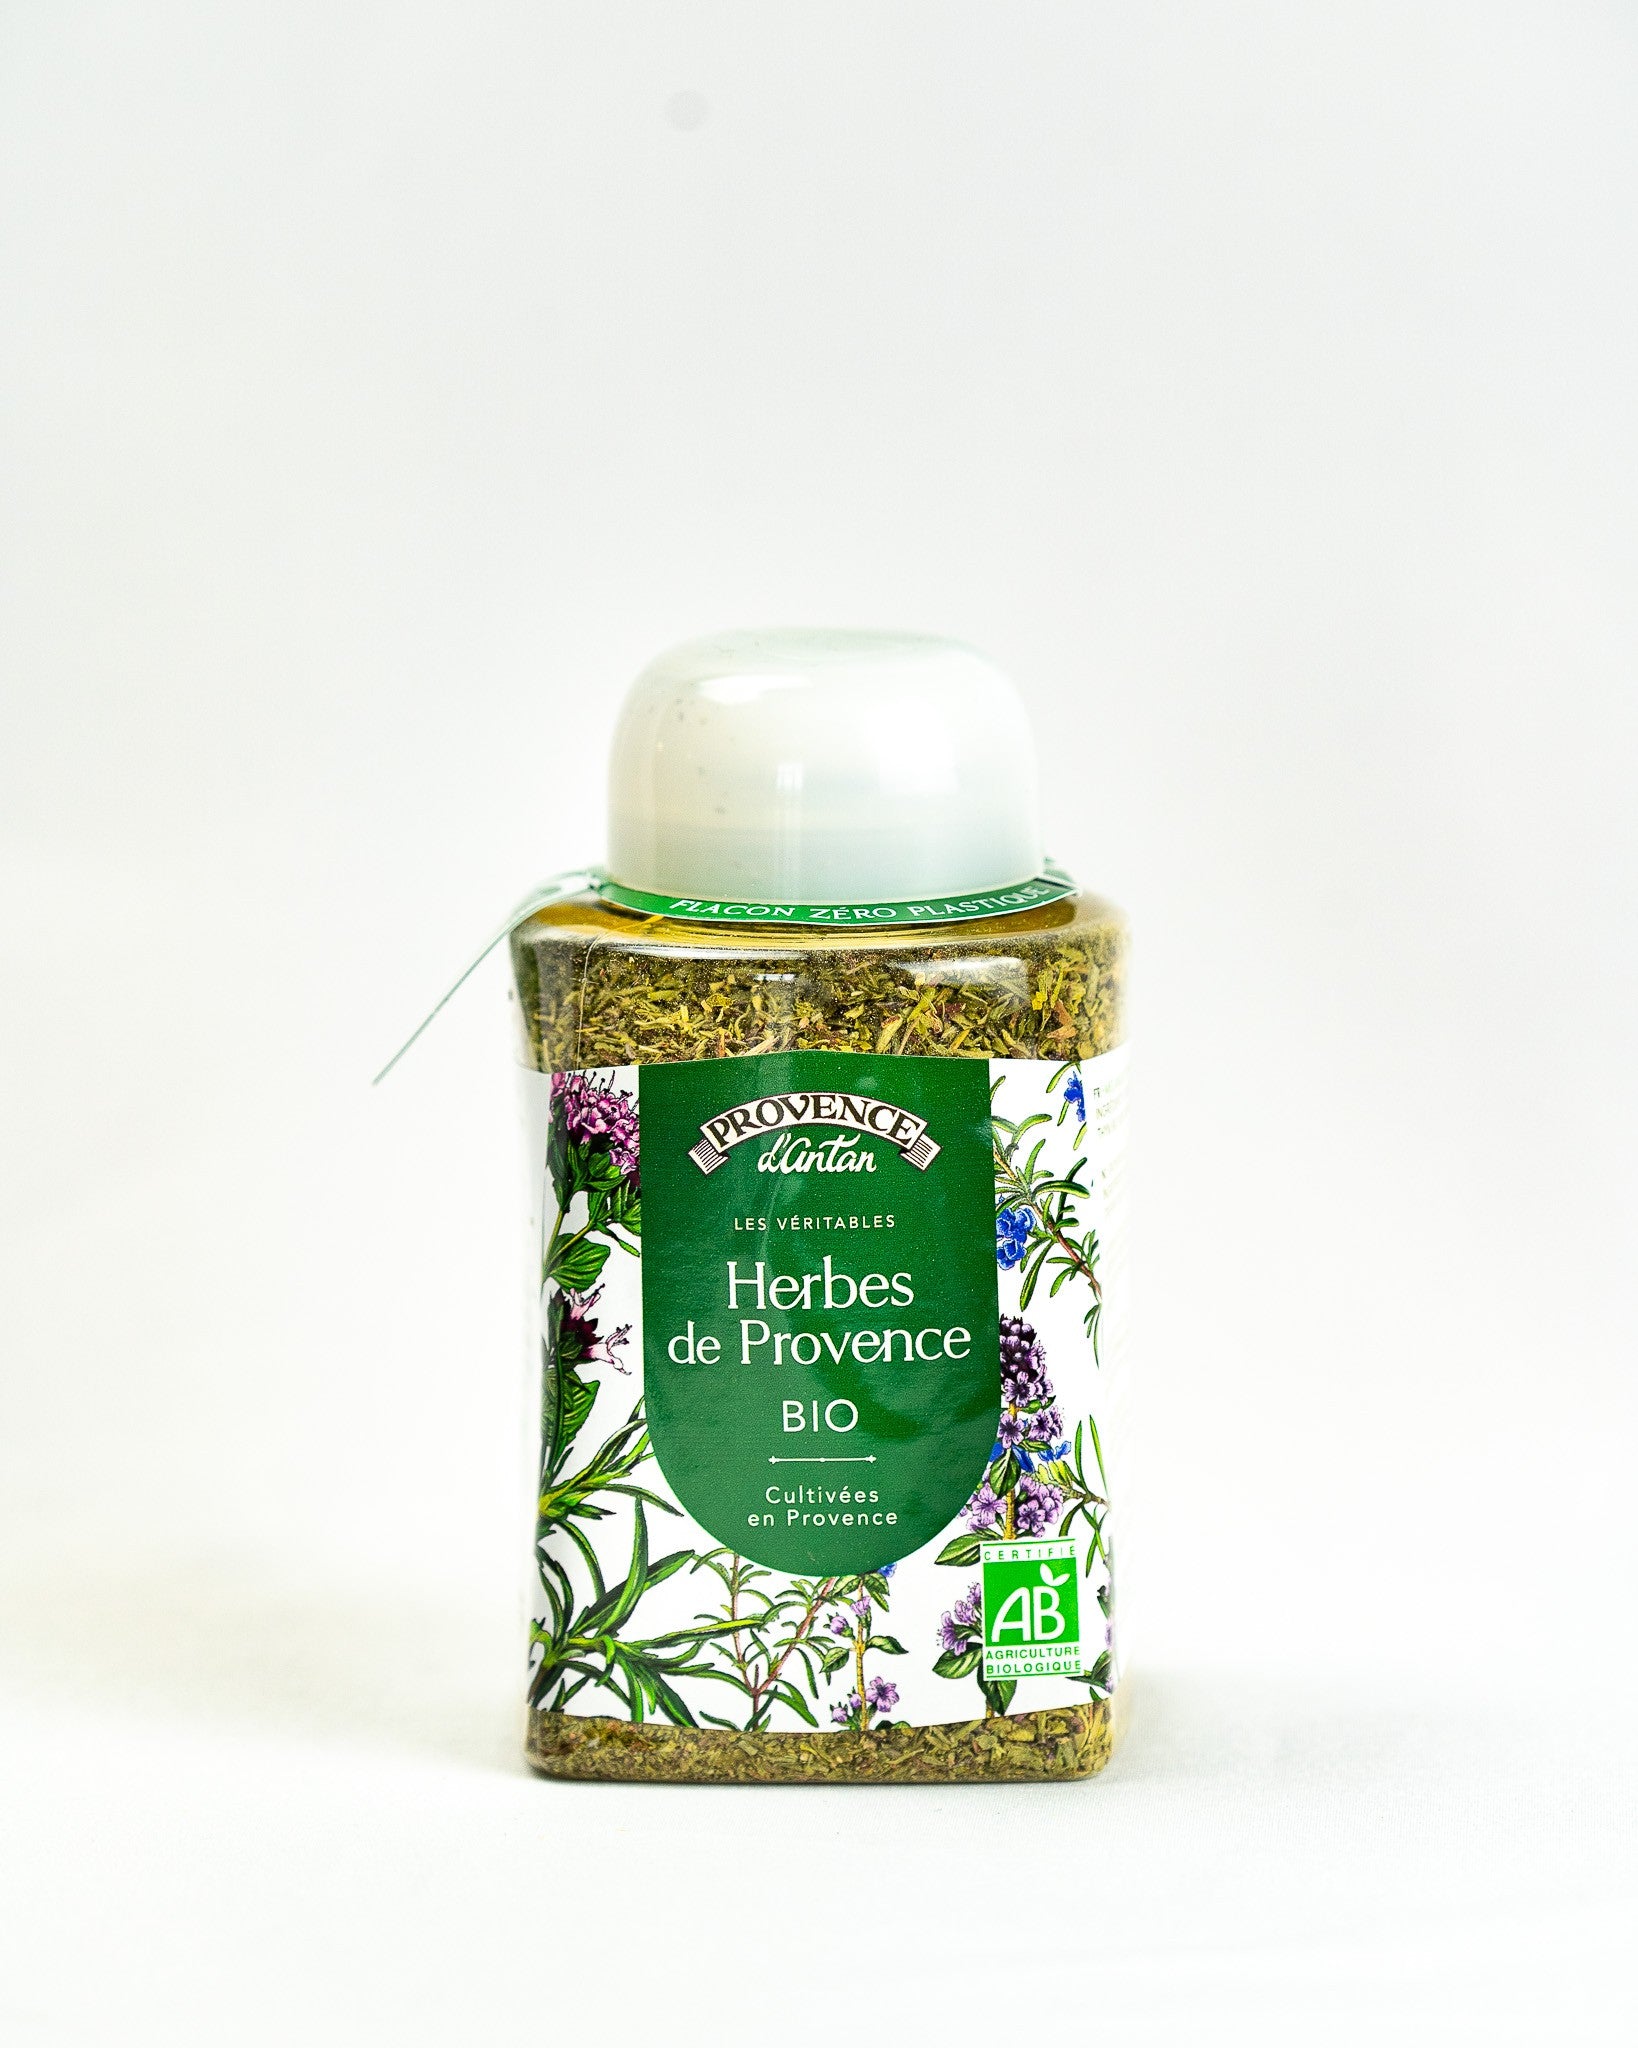 Herbes de Provence flacon, Herbes Aromatiques